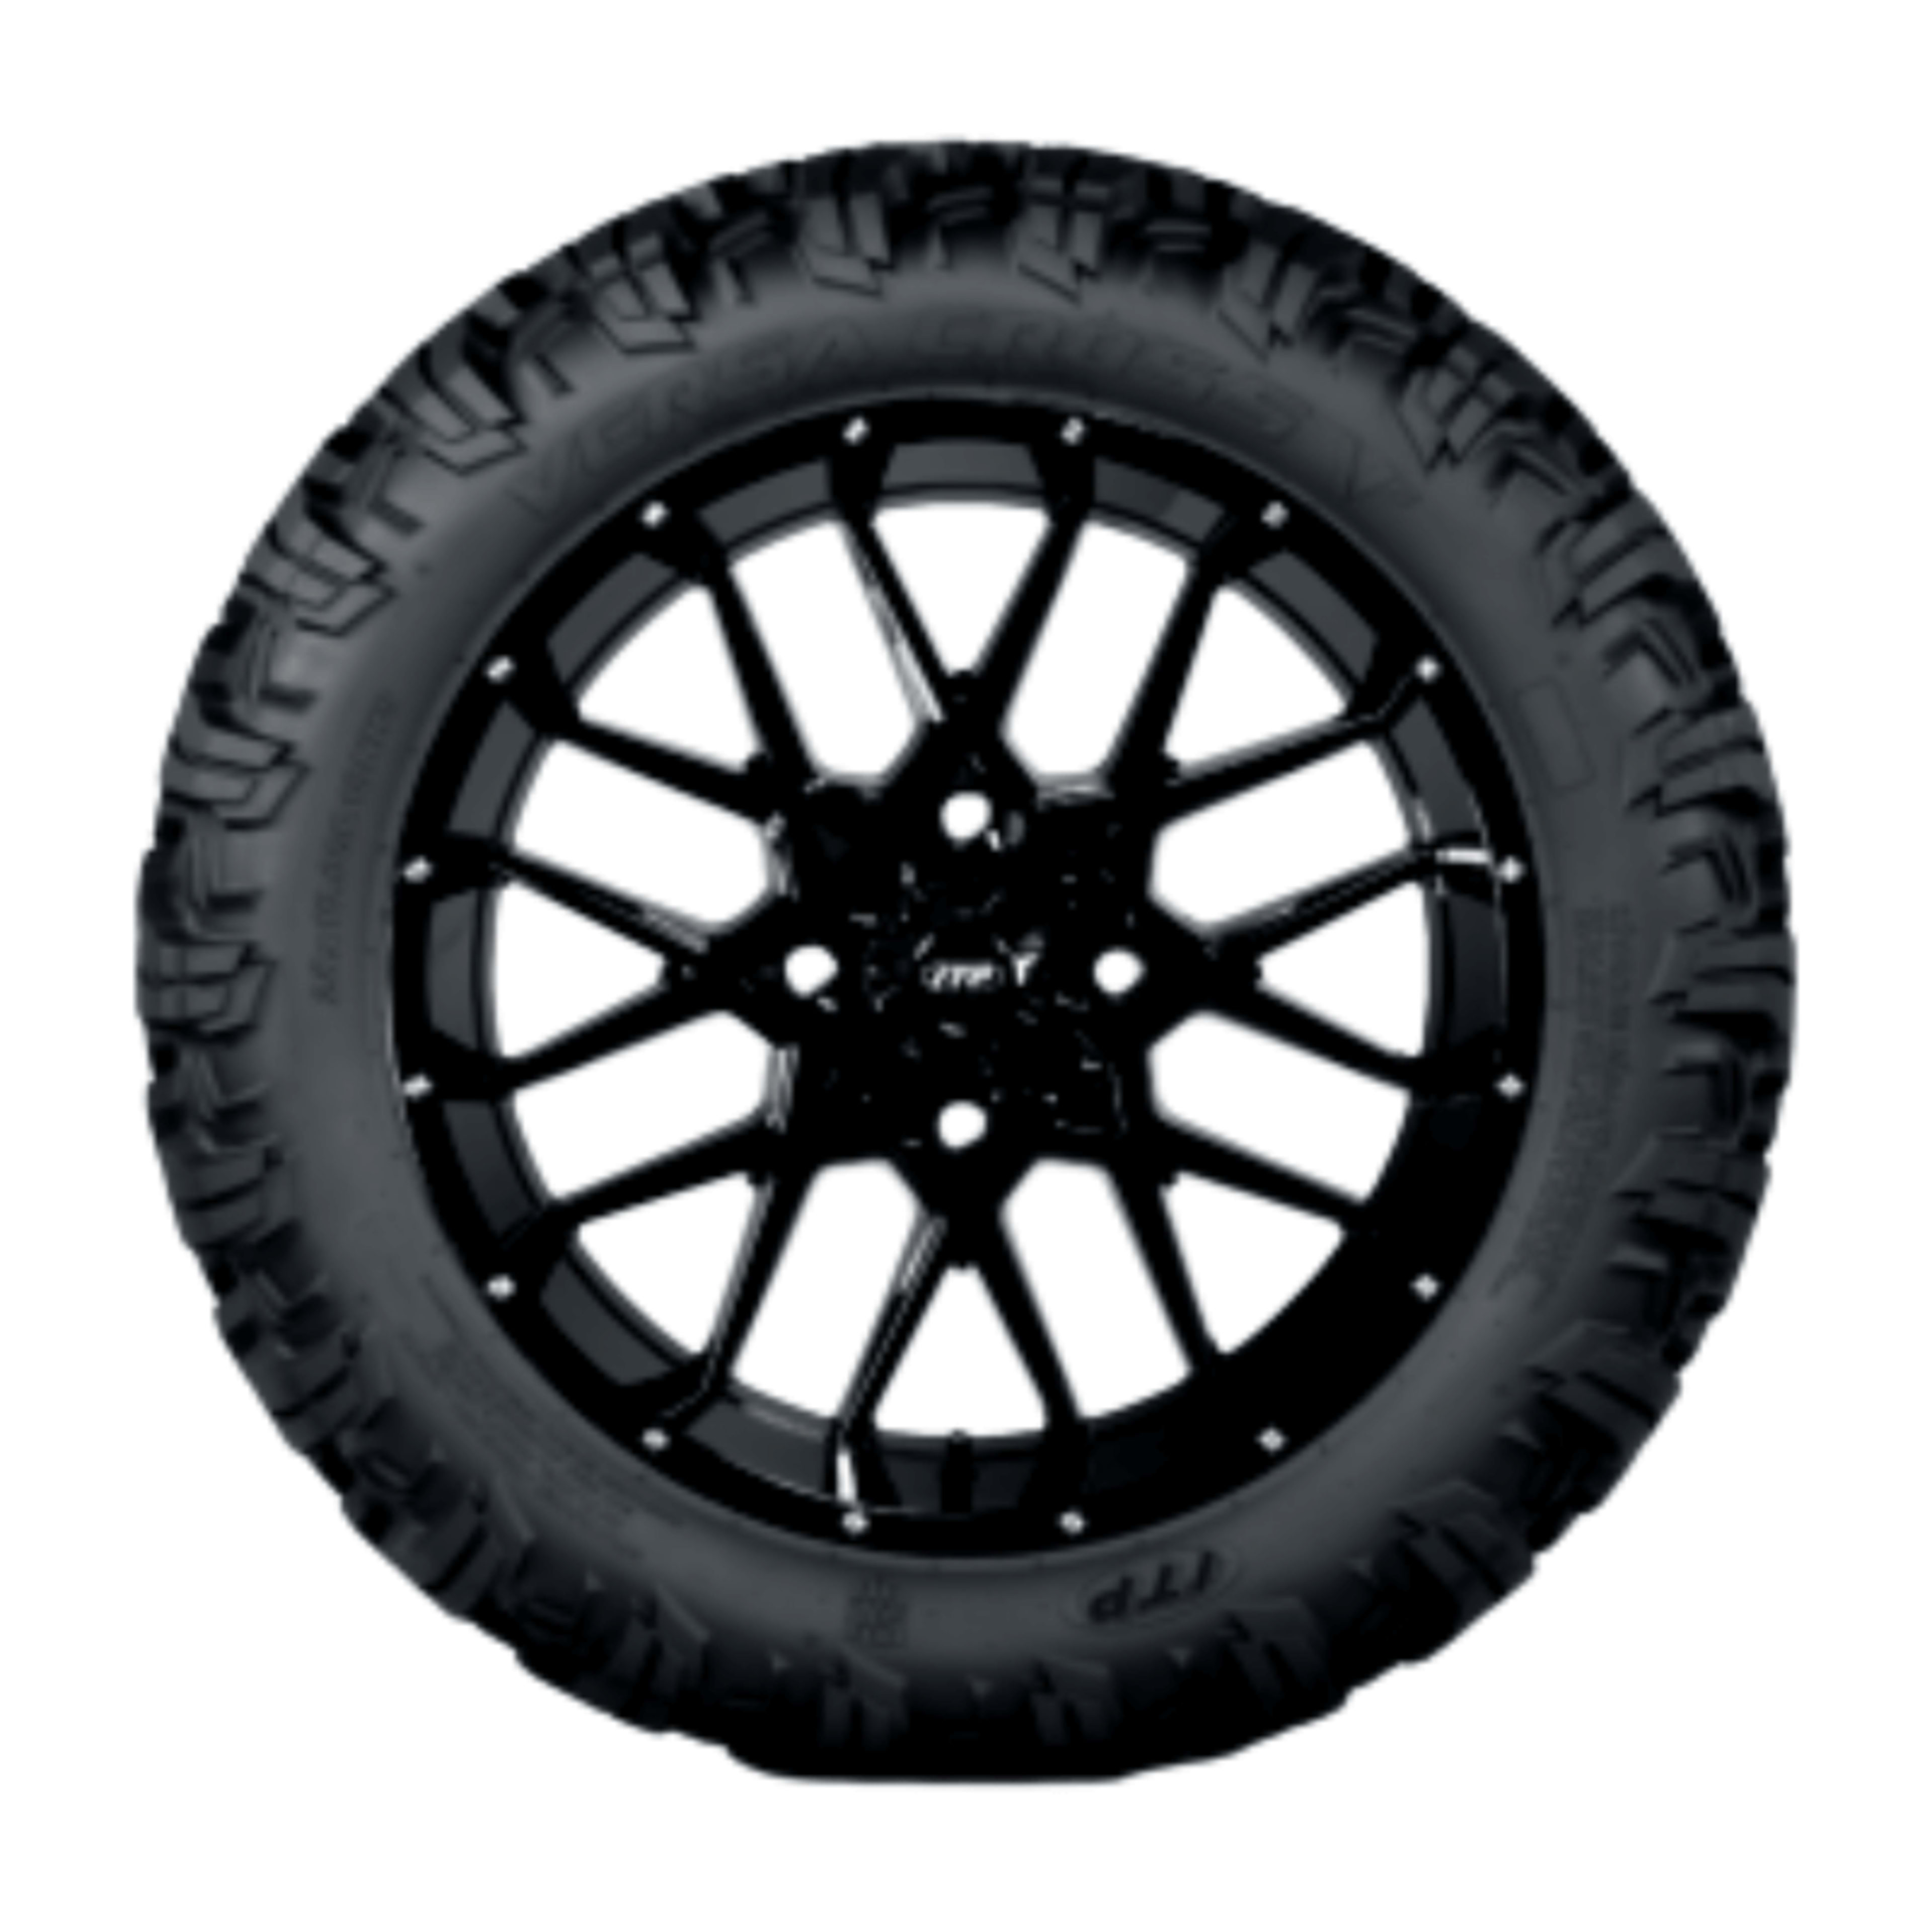 Buy ITP Versa Cross V3 Tires Online | SimpleTire